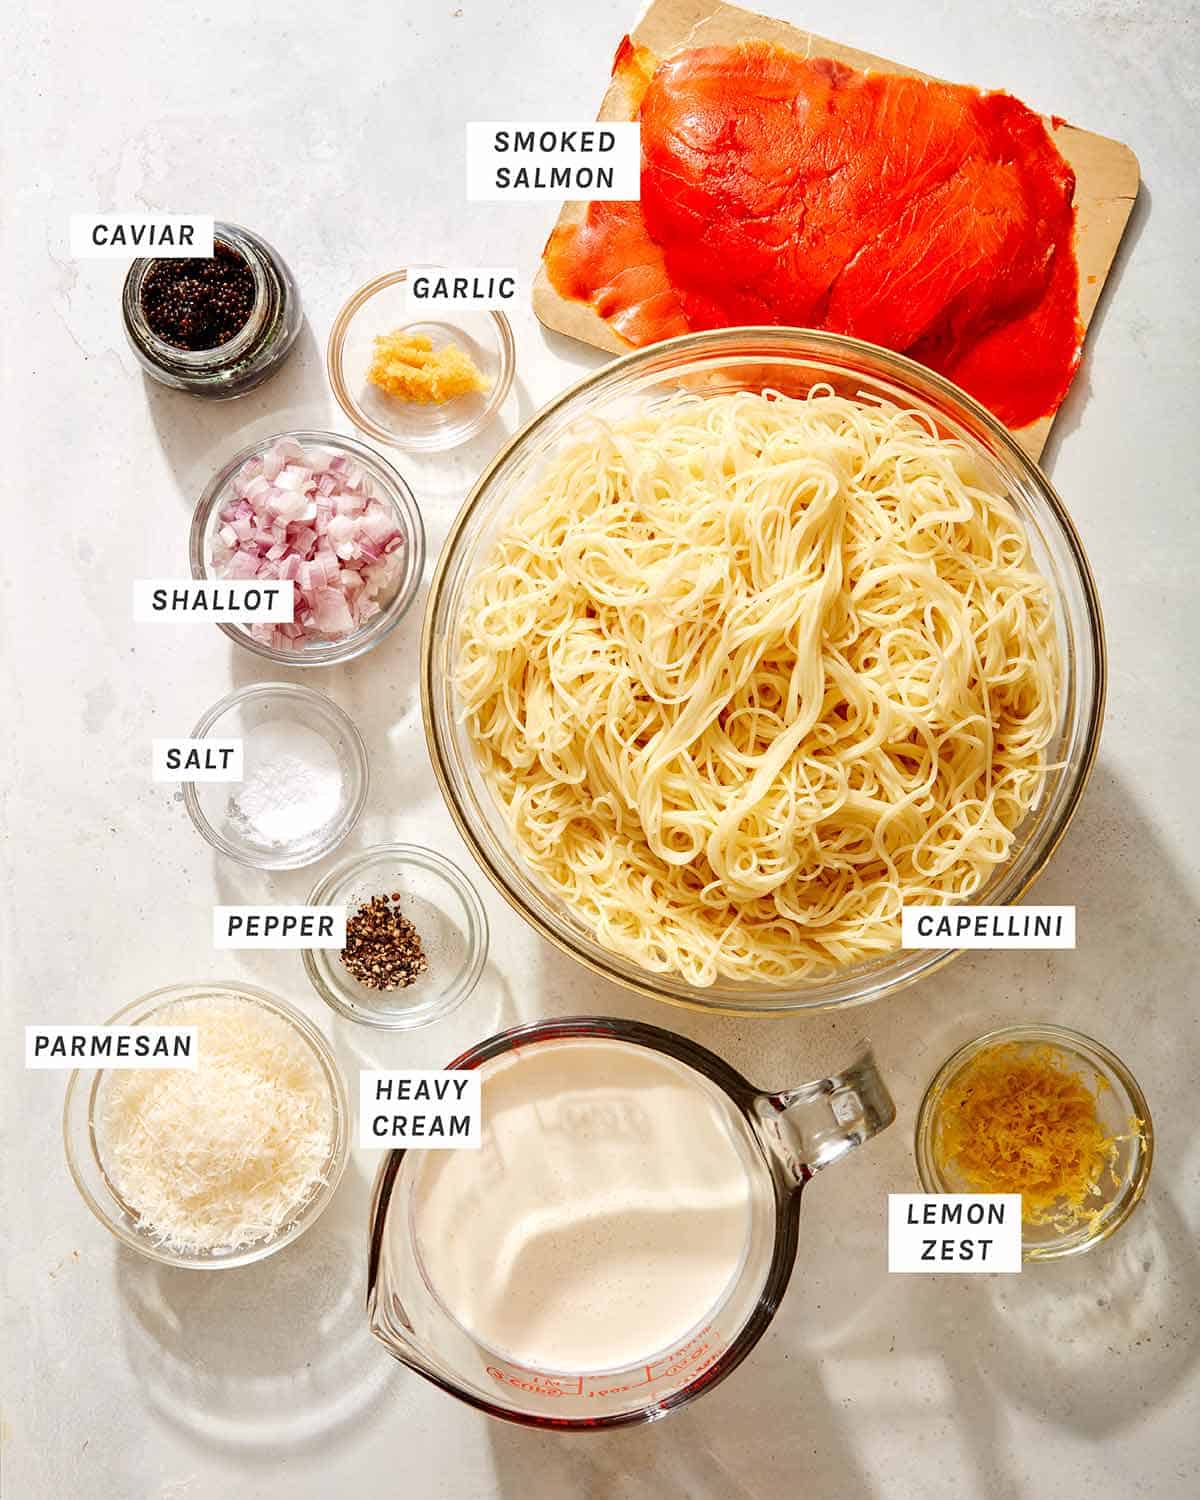 Smoked salmon pasta ingredients on a kitchen counter. 